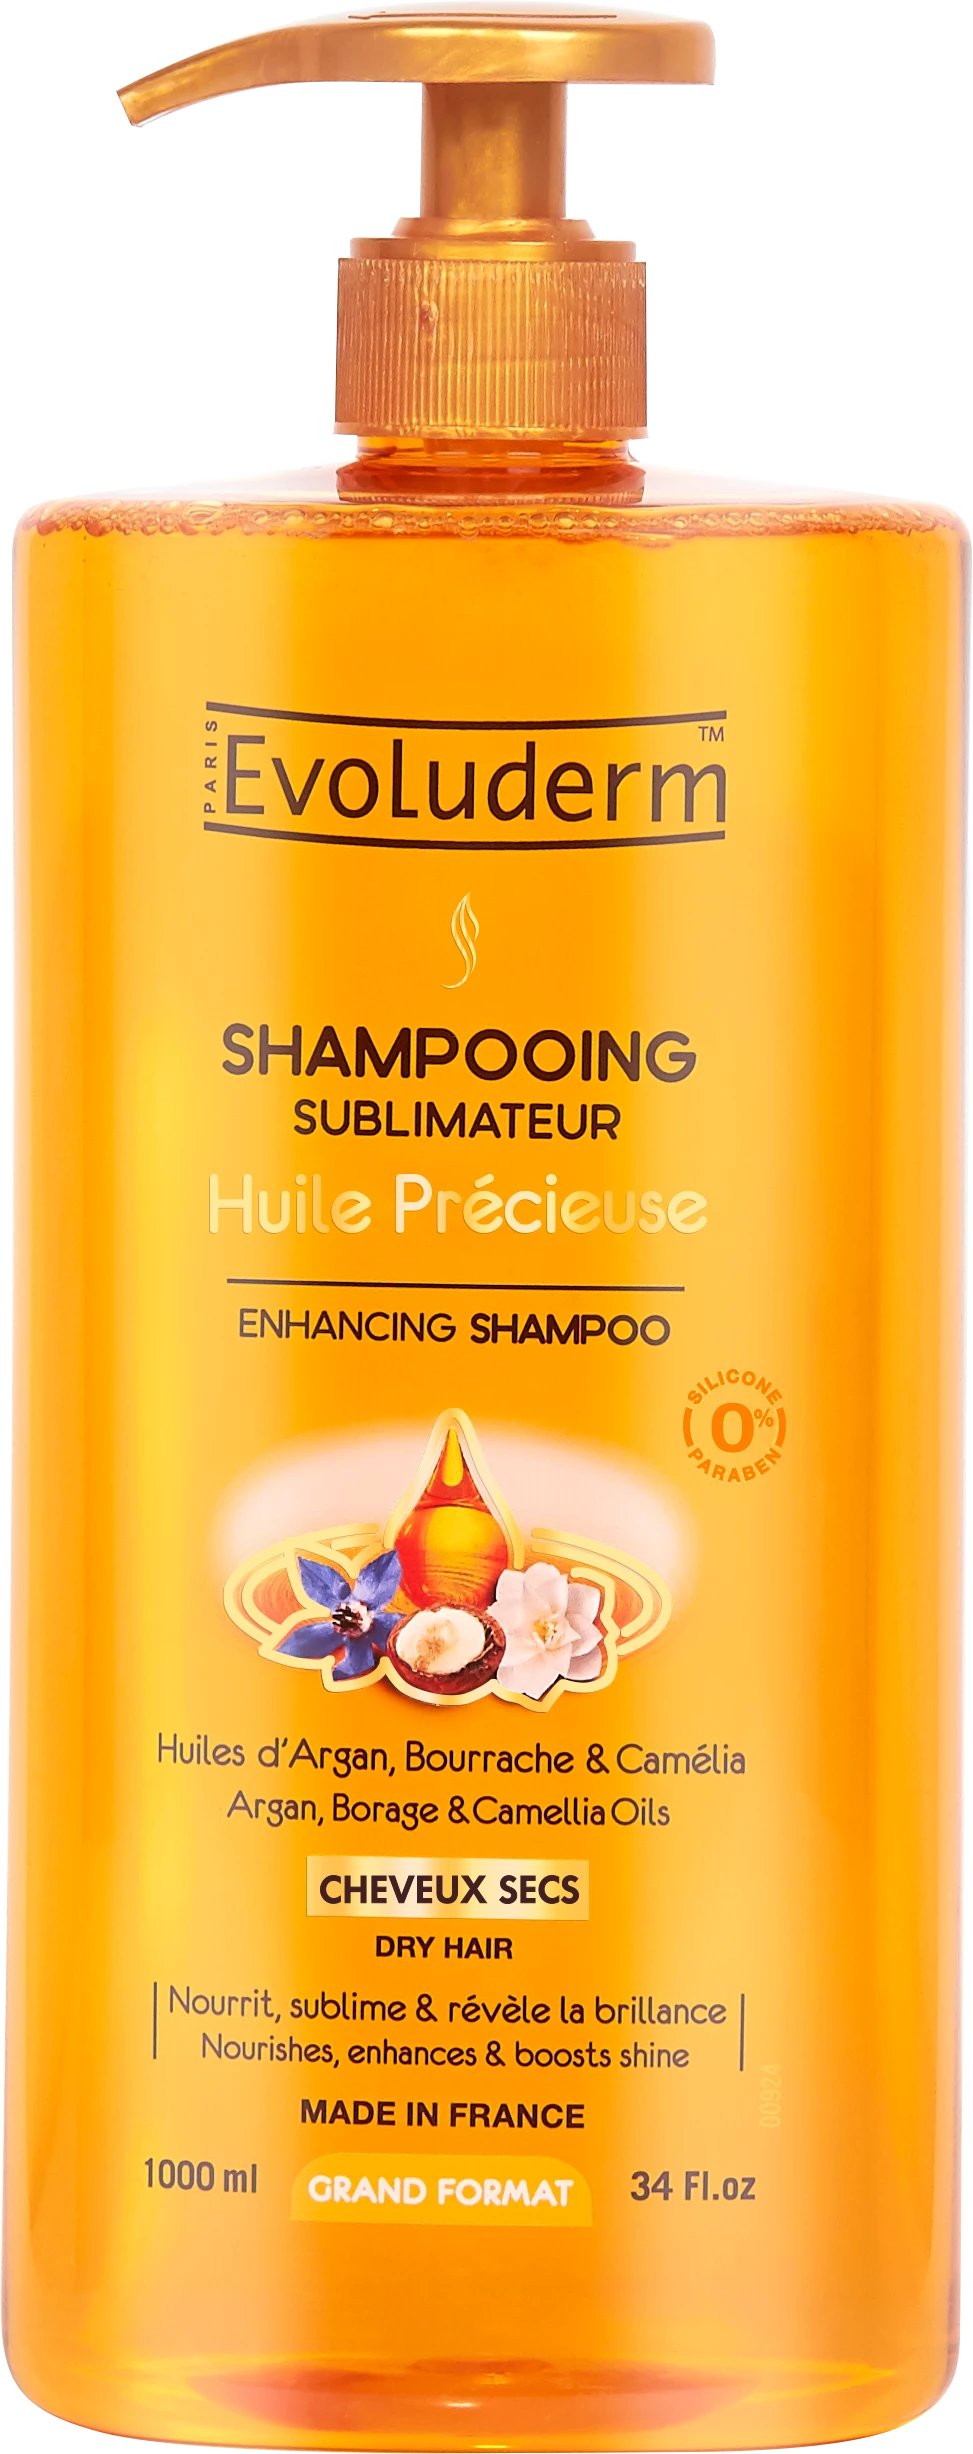 Shampoo Intensificador de Óleo Precioso, 1L - EVOLUDERM